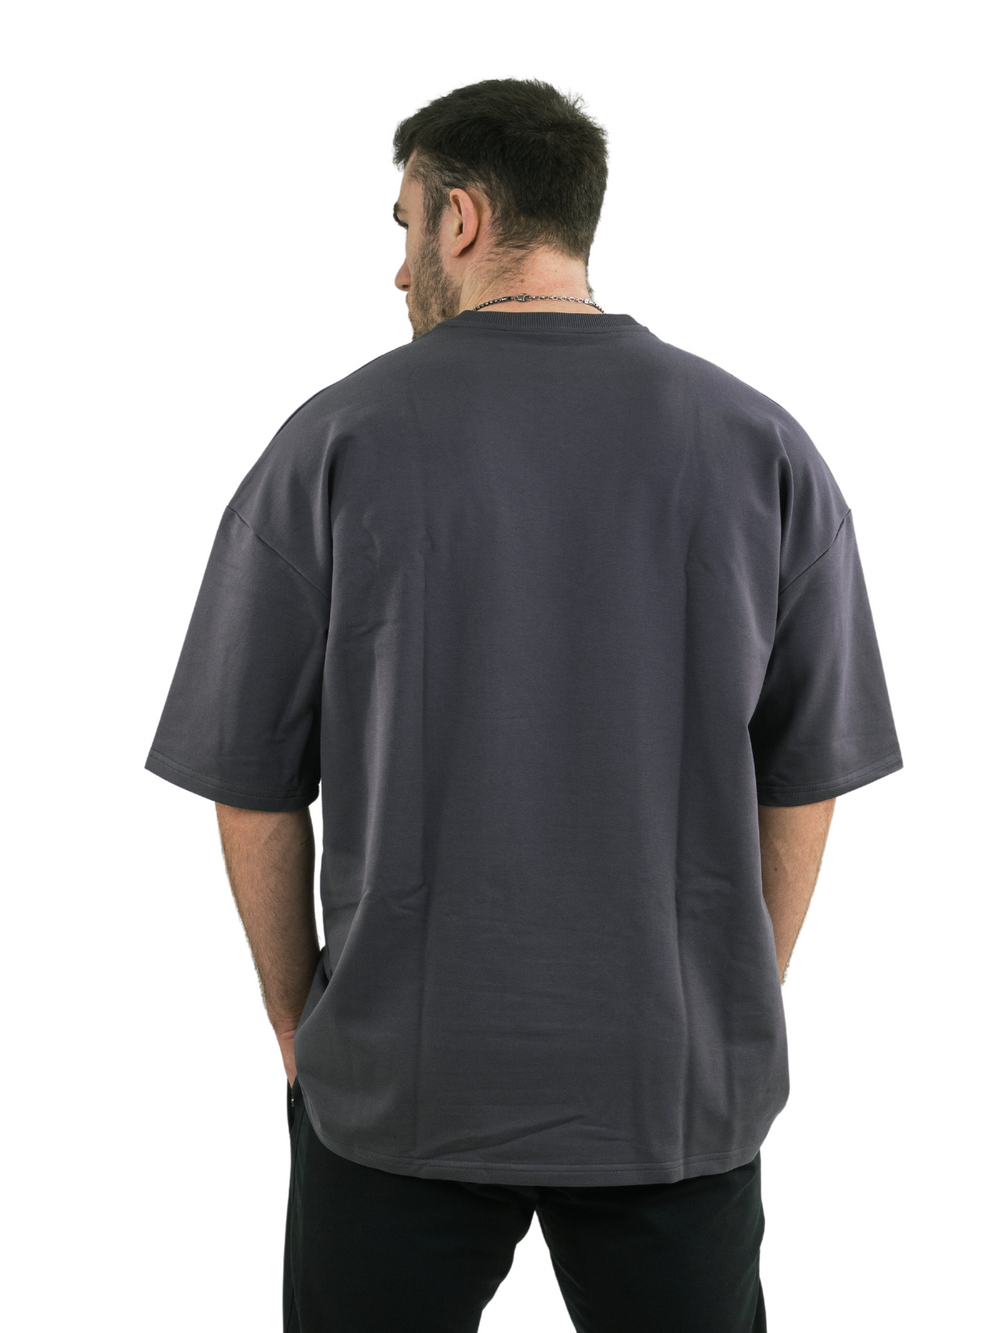 DASGYM. Oversize Shirt 2.0 Graphite